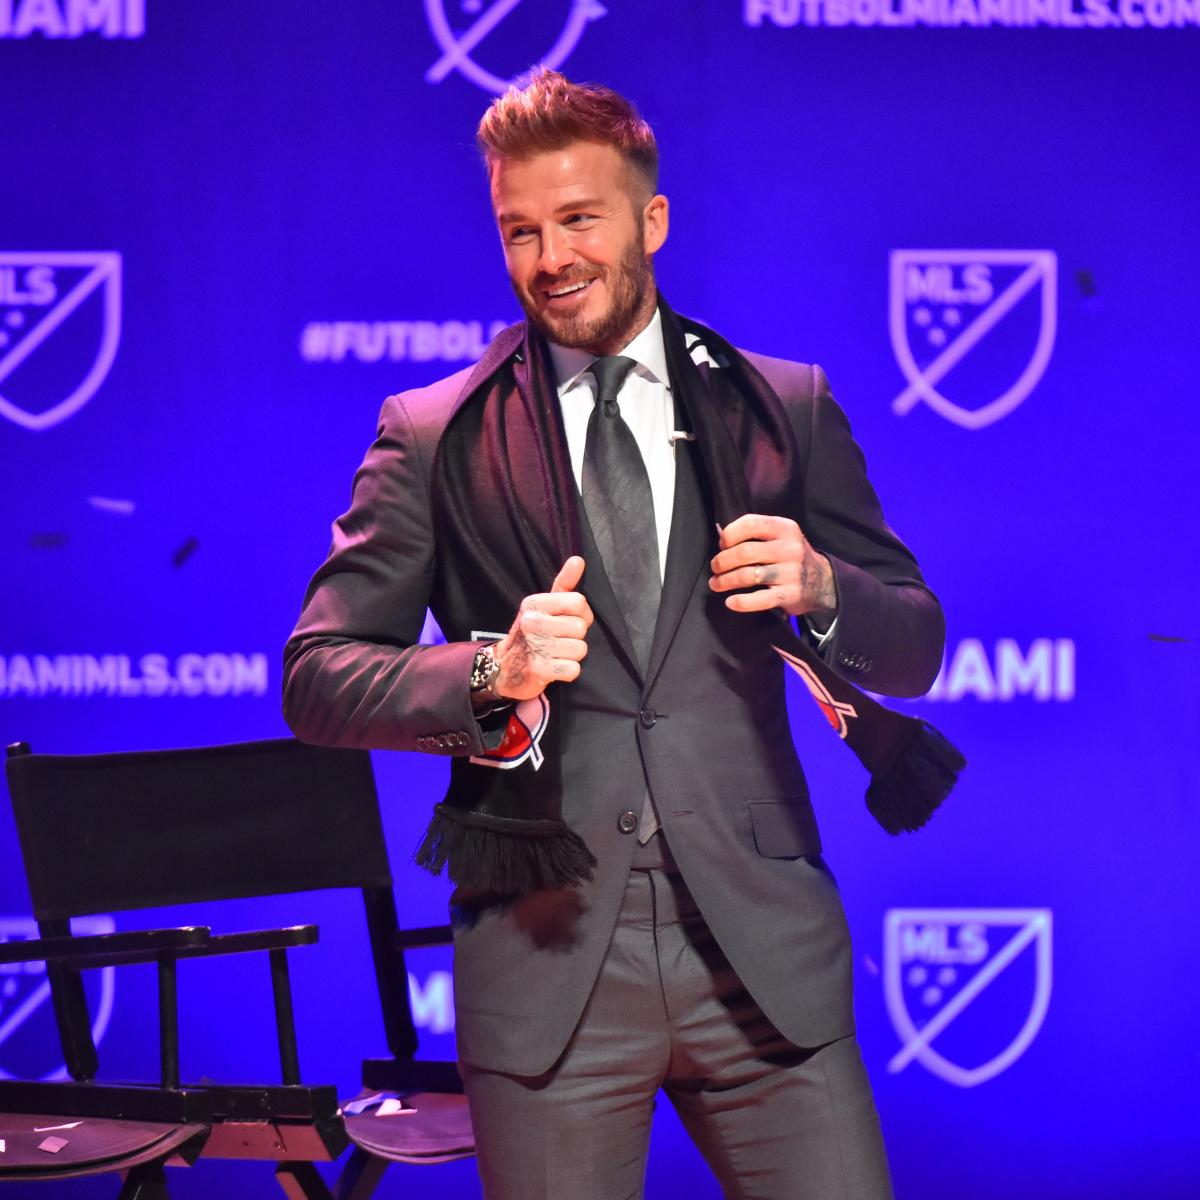 Ralph Lauren Creates Custom Inter Miami Suit For David Beckham - SoccerBible